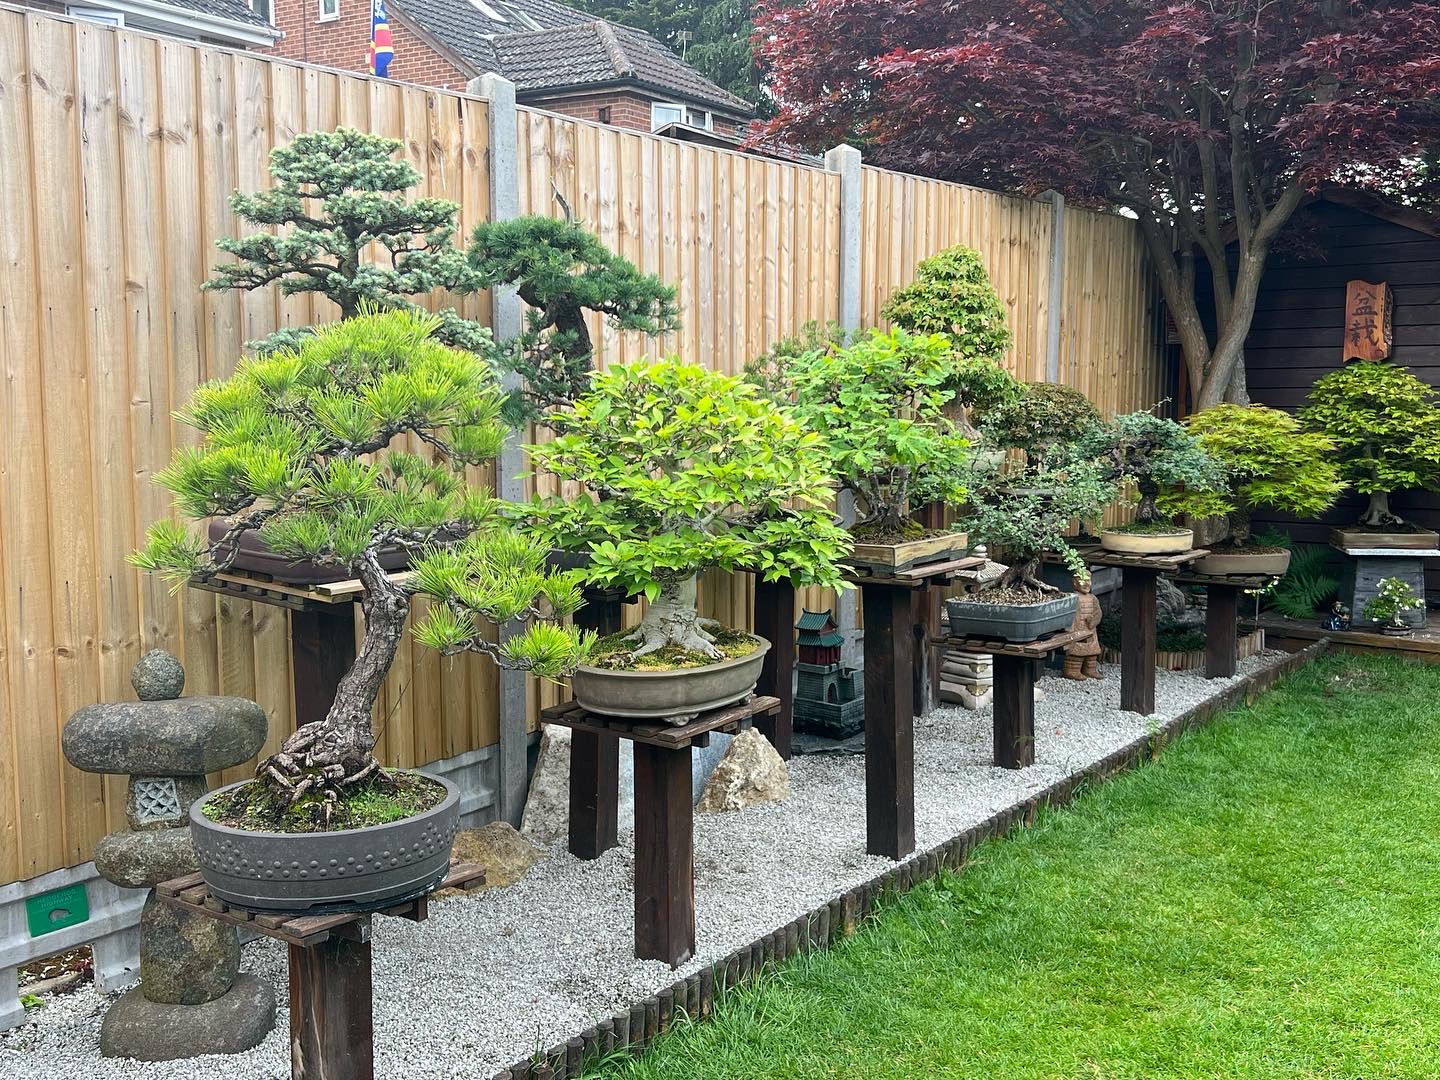 Bonsai garden in the New Forest